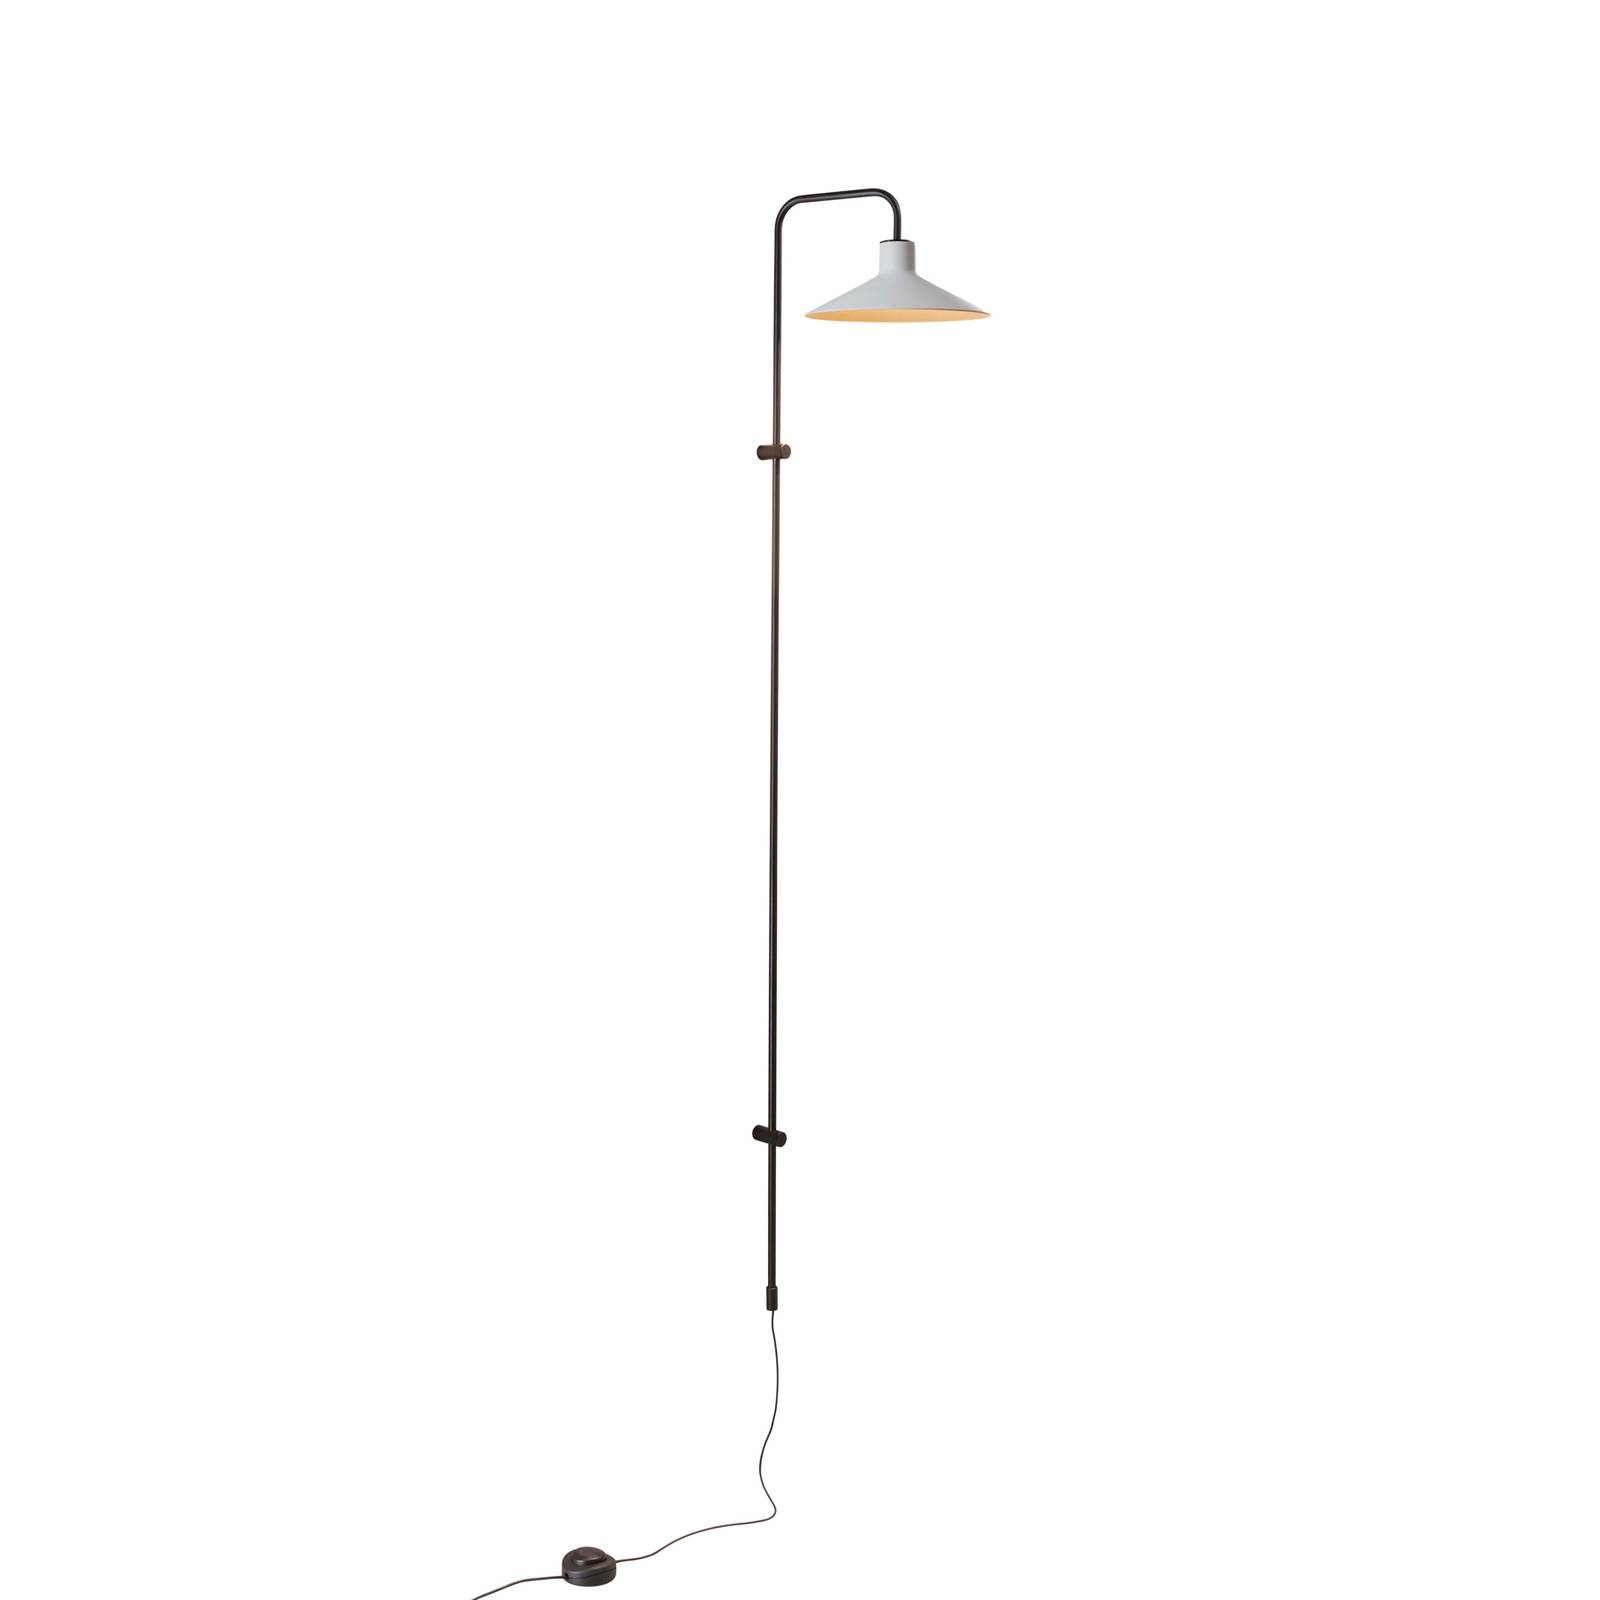 Bover Platet A05 LED-Wandlampe Dimmer, hellgrau von Bover